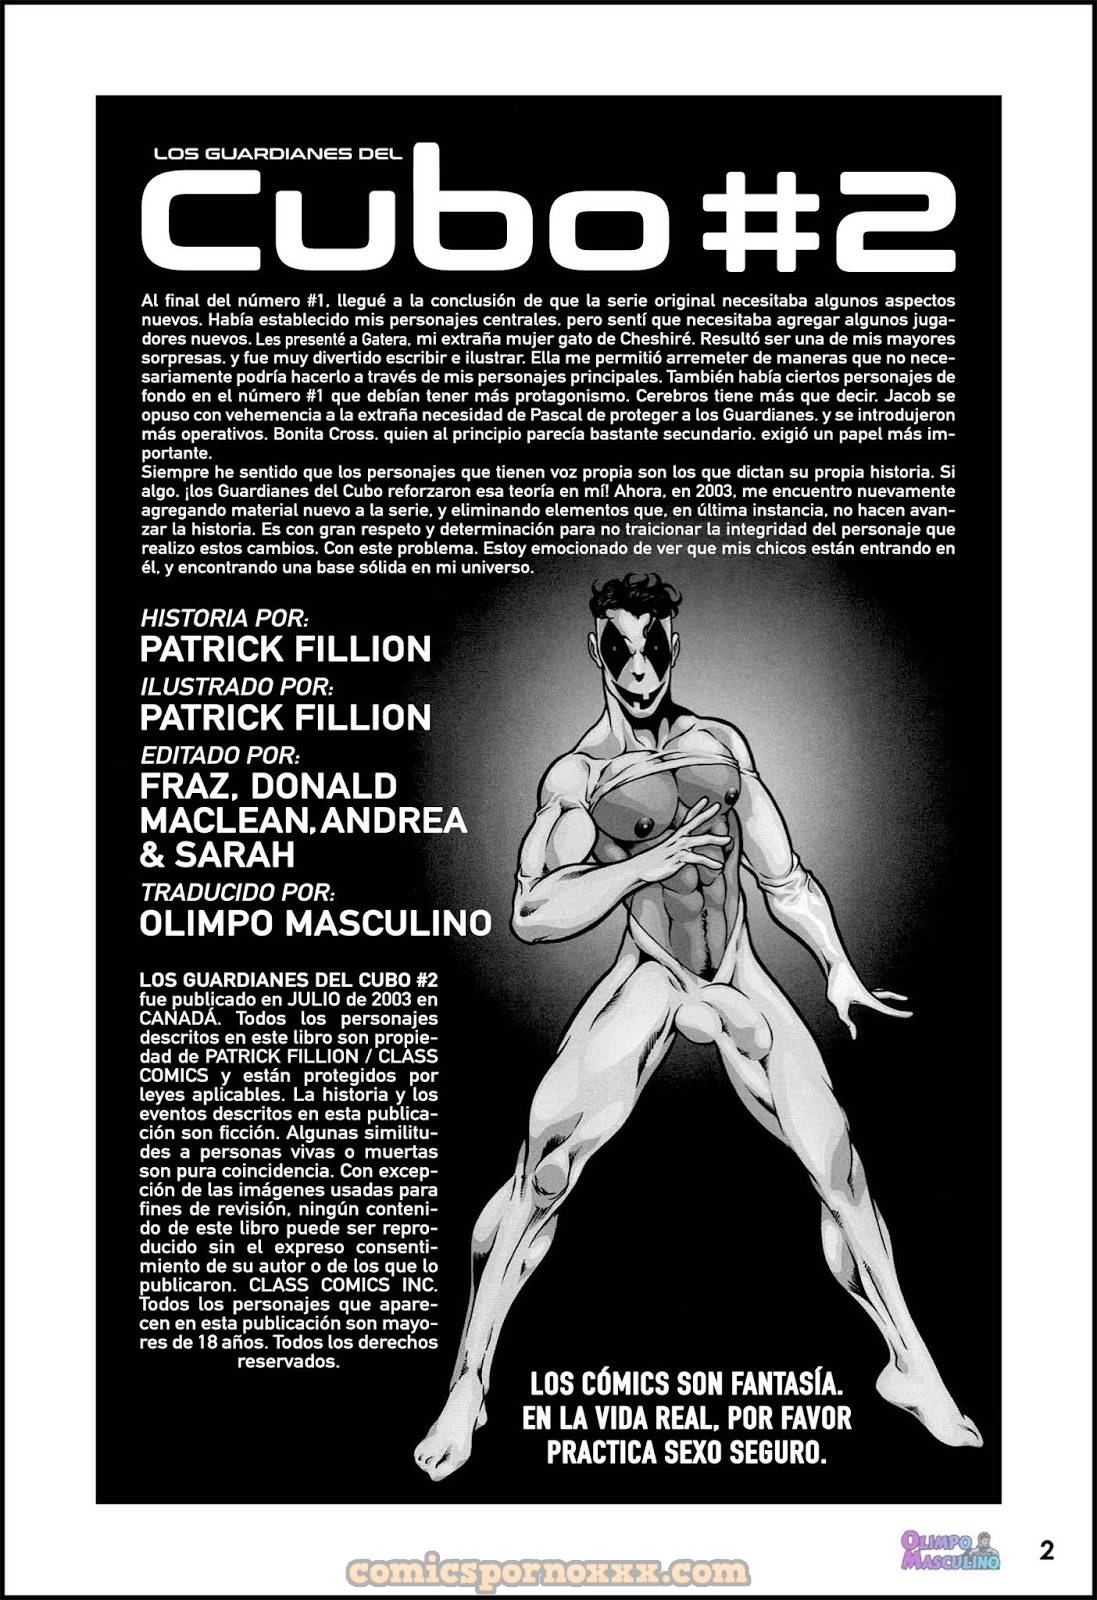 Los Guardianes del Cubo (Libro #2) - 1 - Comics Porno - Hentai Manga - Cartoon XXX